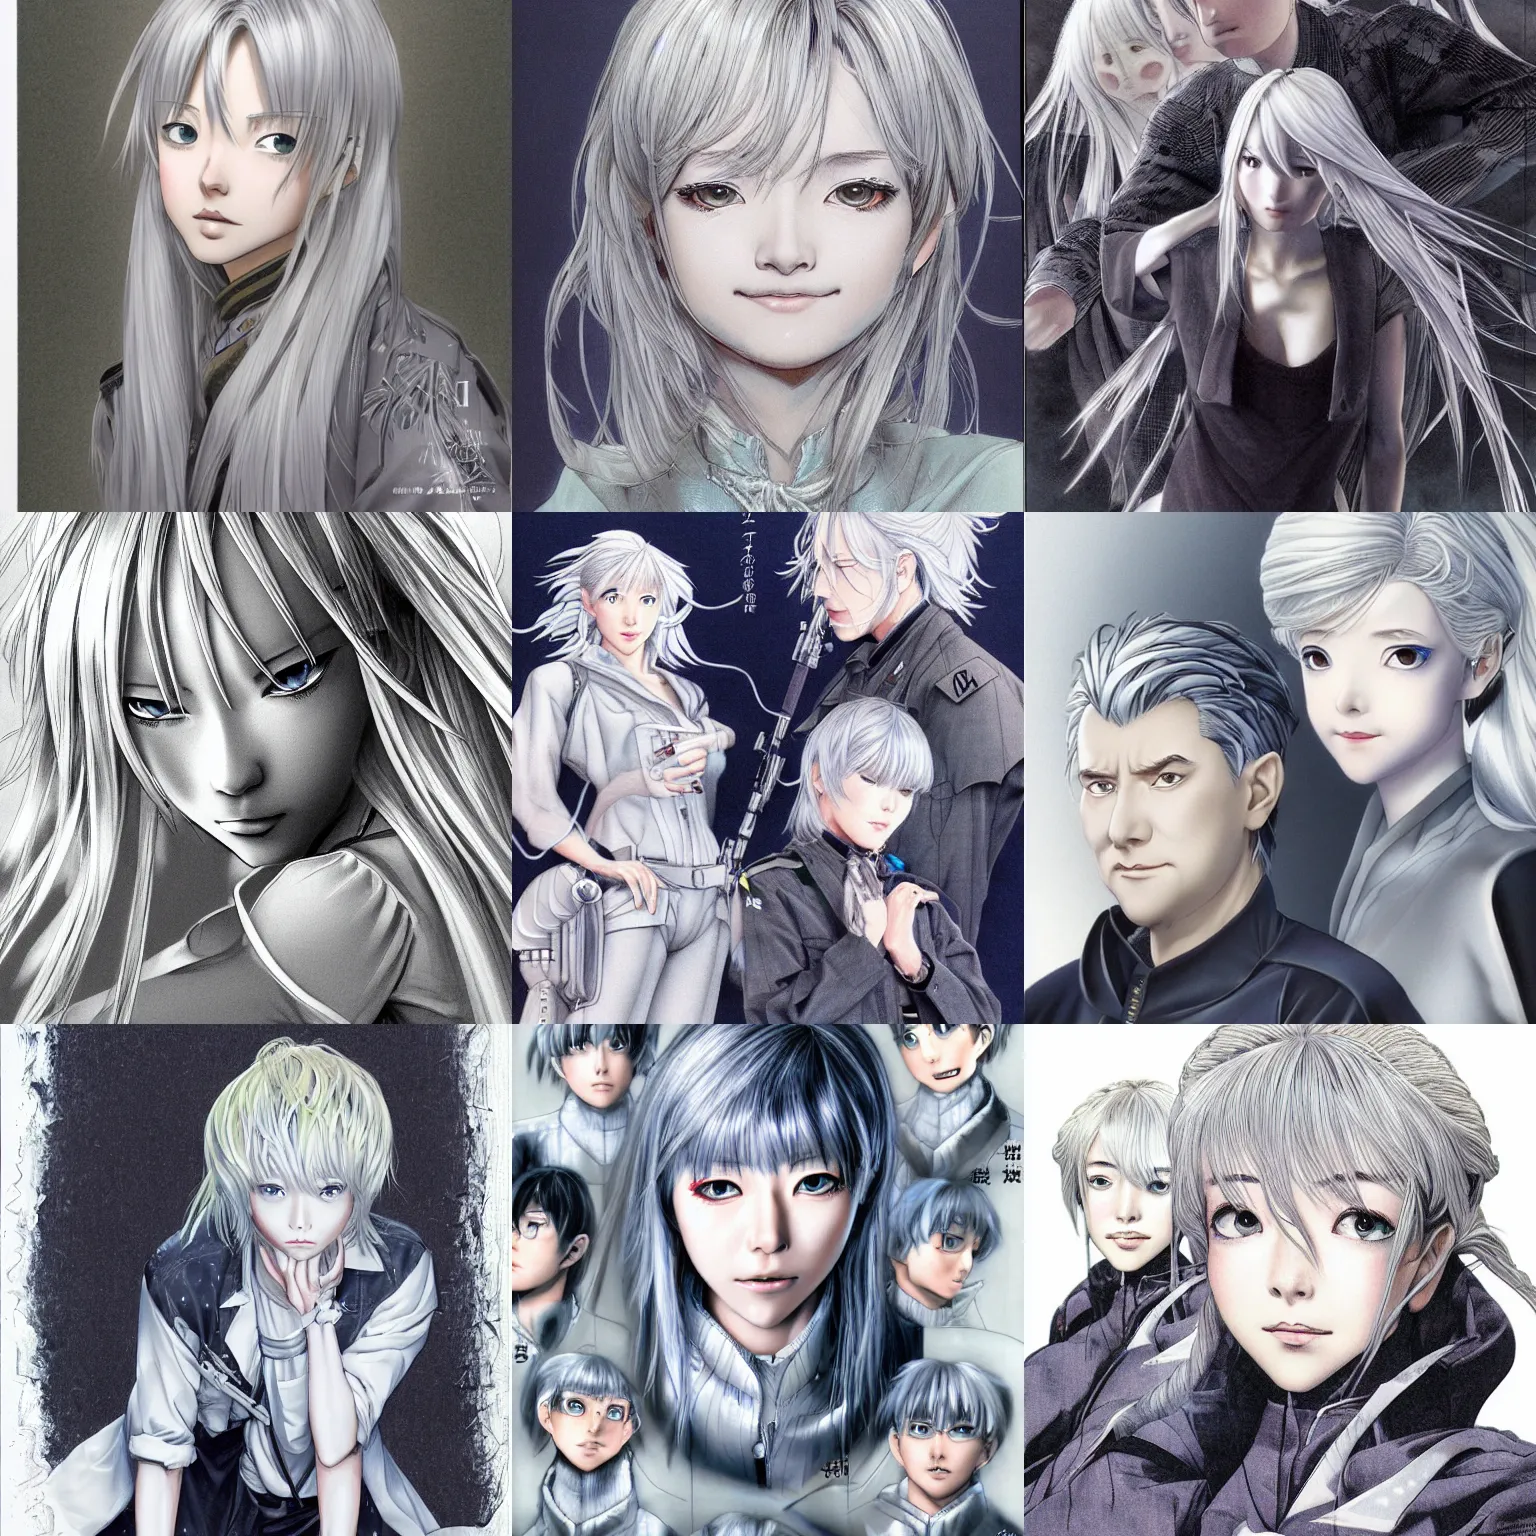 Prompt: silver hair girl, multicam, portrait ilustration by Shinji Aramaki and Takehiko Inoue